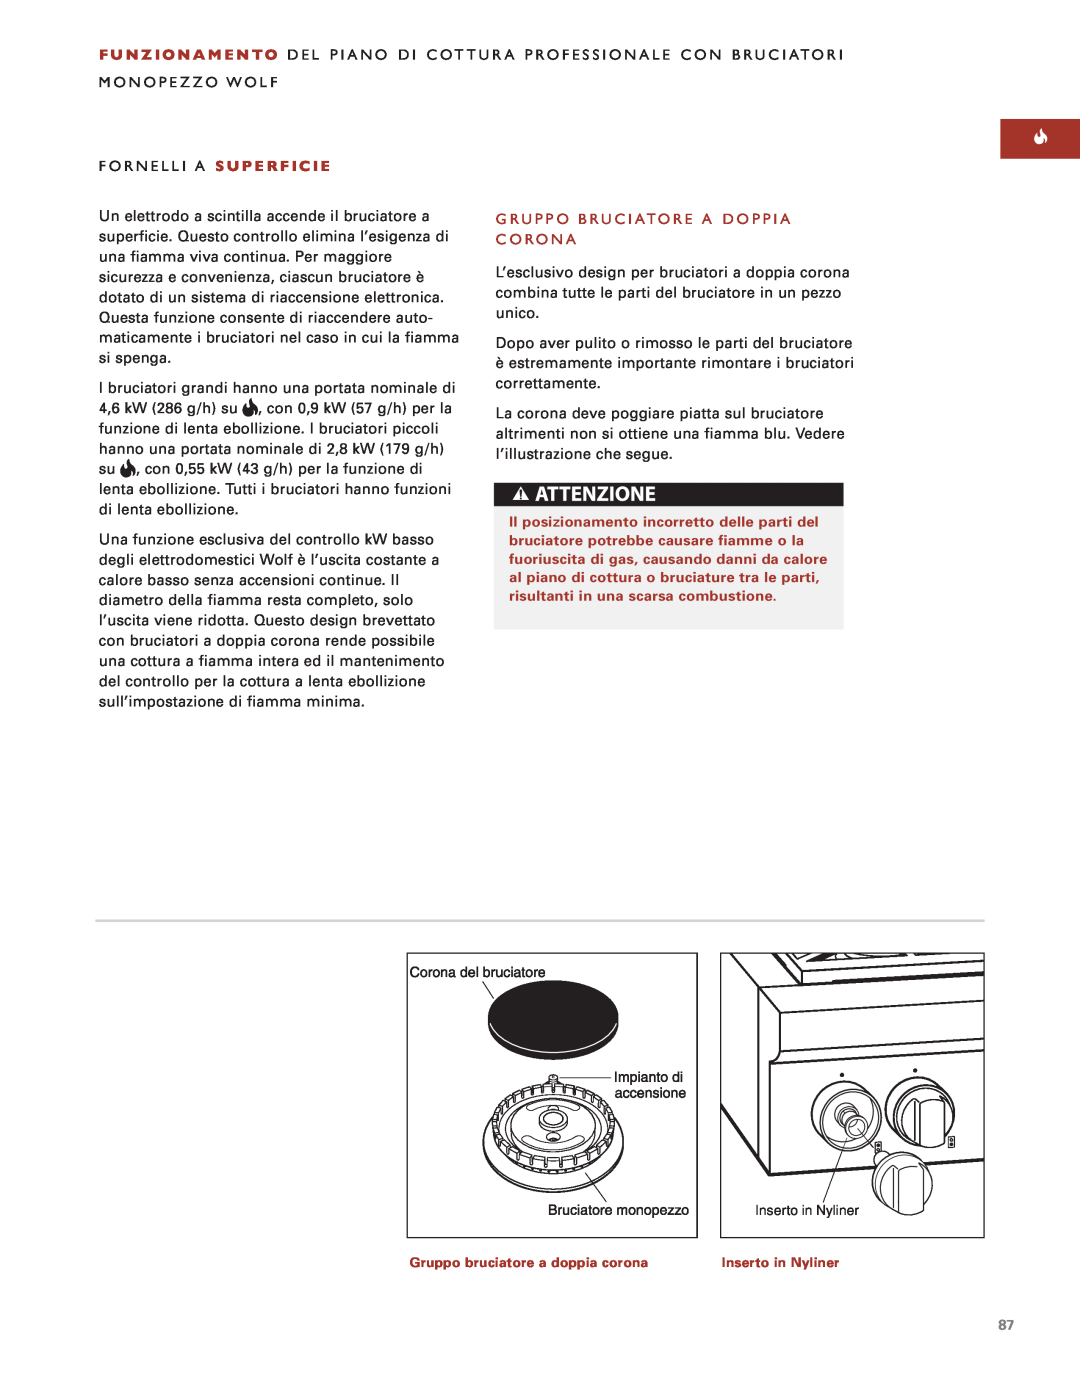 Sub-Zero Sealed Burner RangeTop manual Fornelli A S U P E R F I C I E, Gruppo Bruciatore A Doppia, Corona 